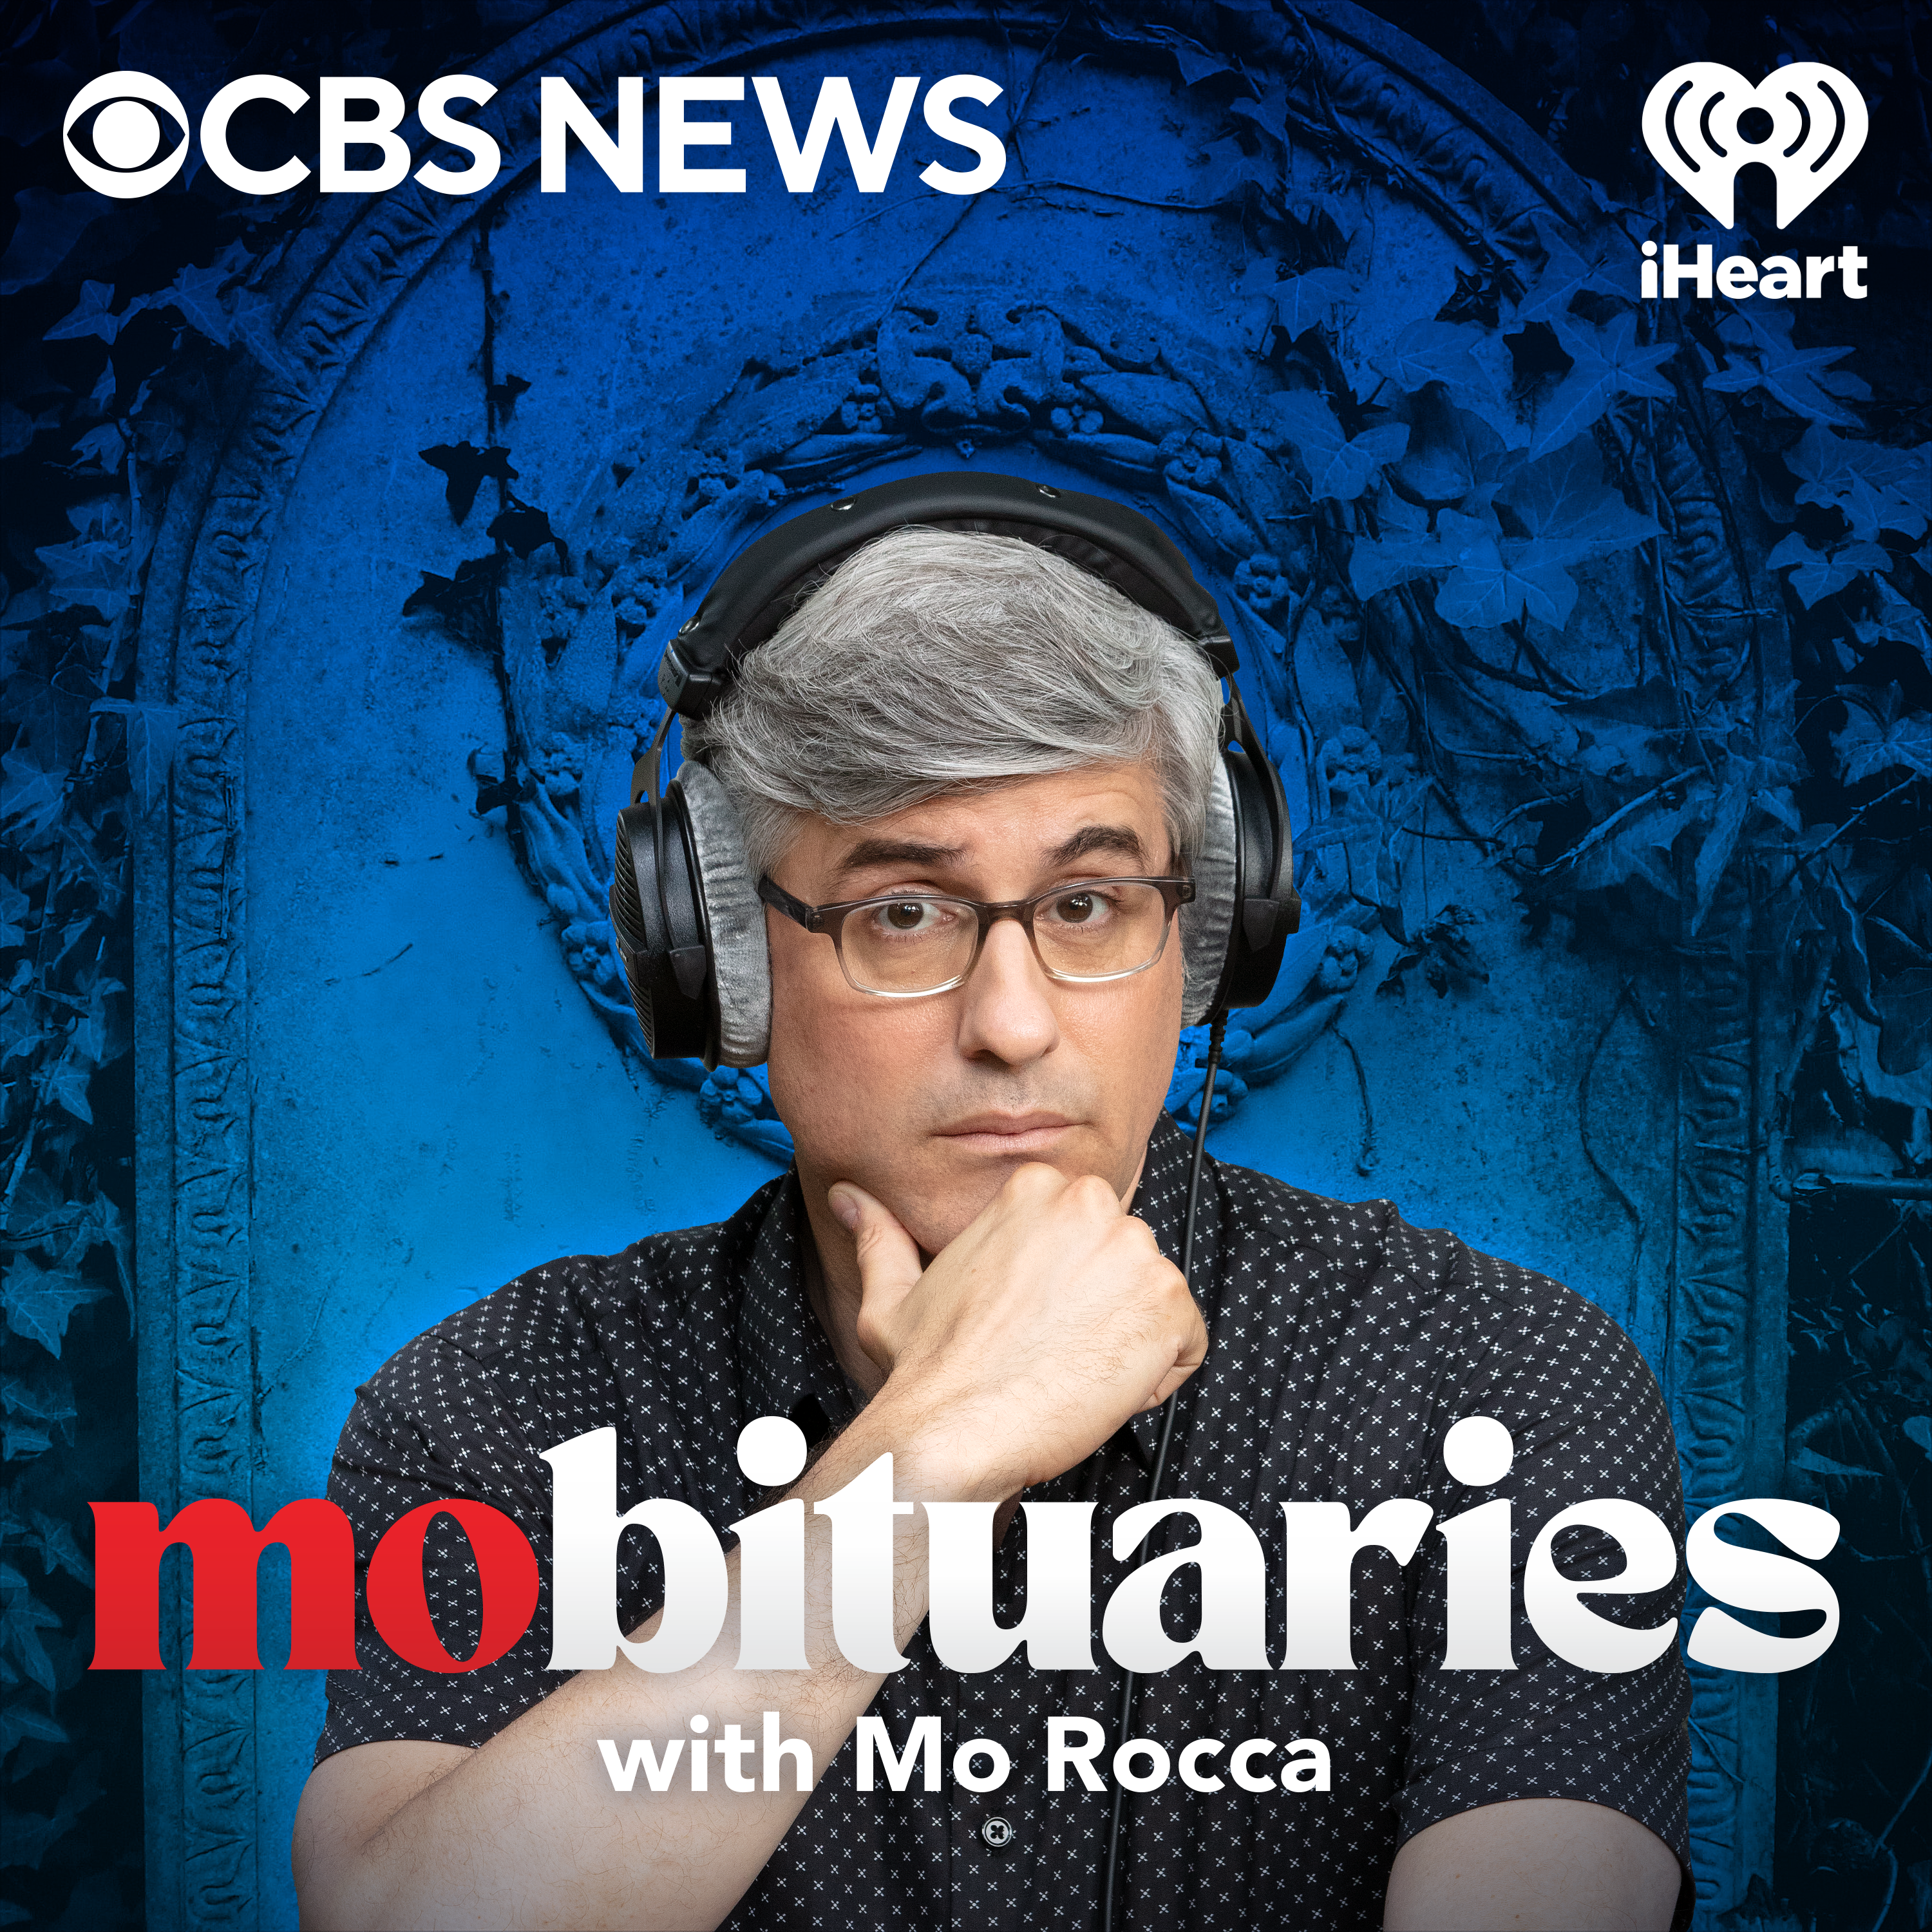 Mobituaries with Mo Rocca Season 2 Trailer